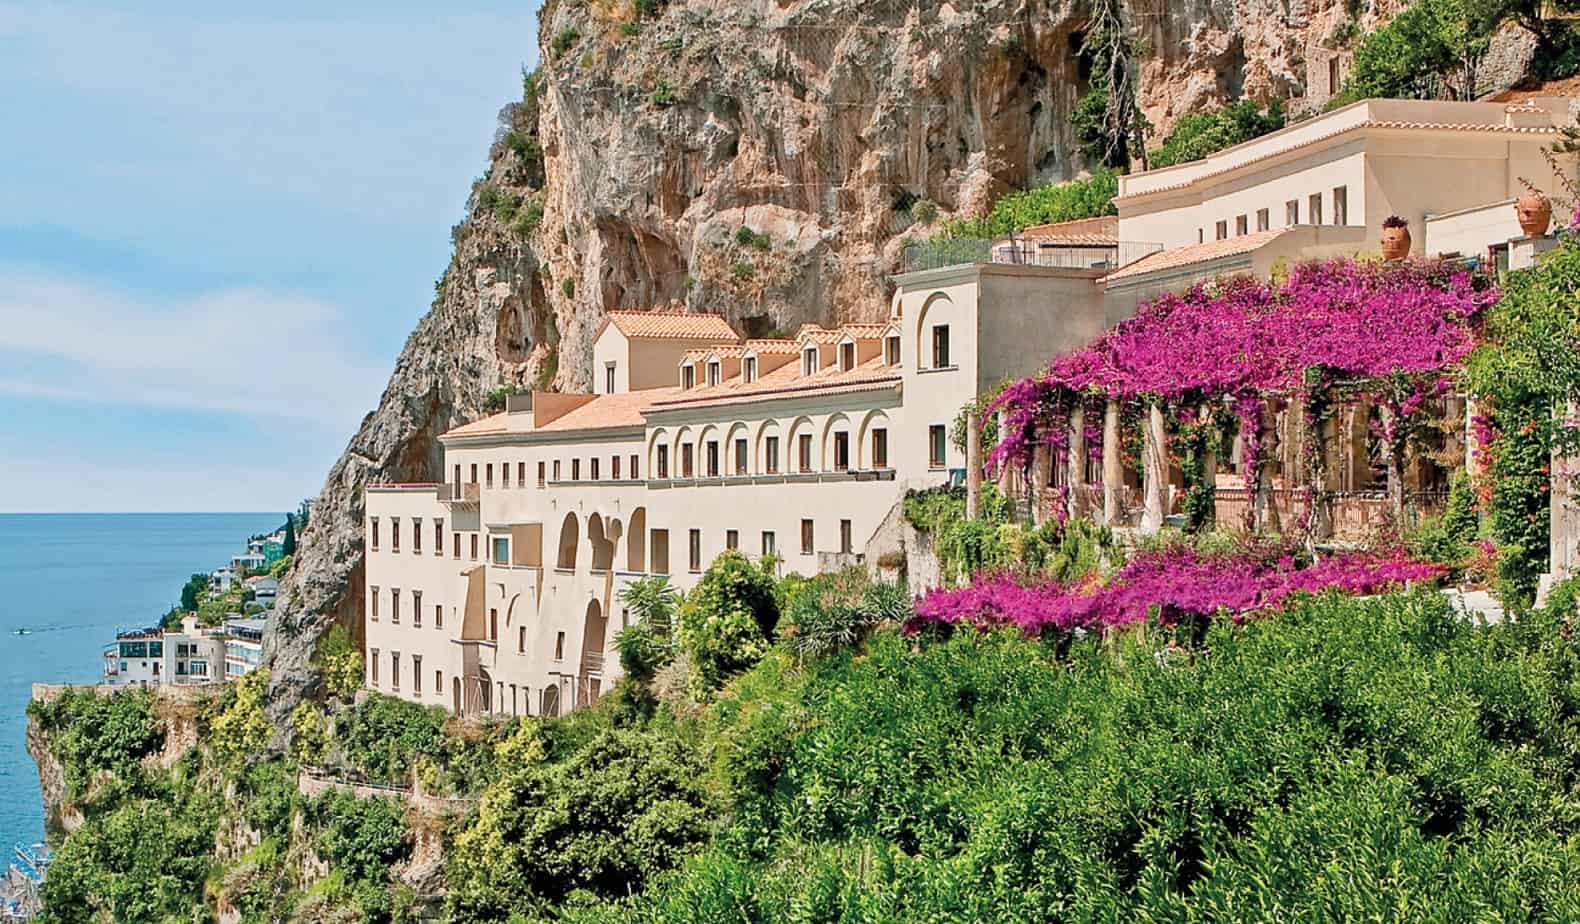 Grand Hotel Convento di Amalfi - Hotels in Italy on Amalfi Coast